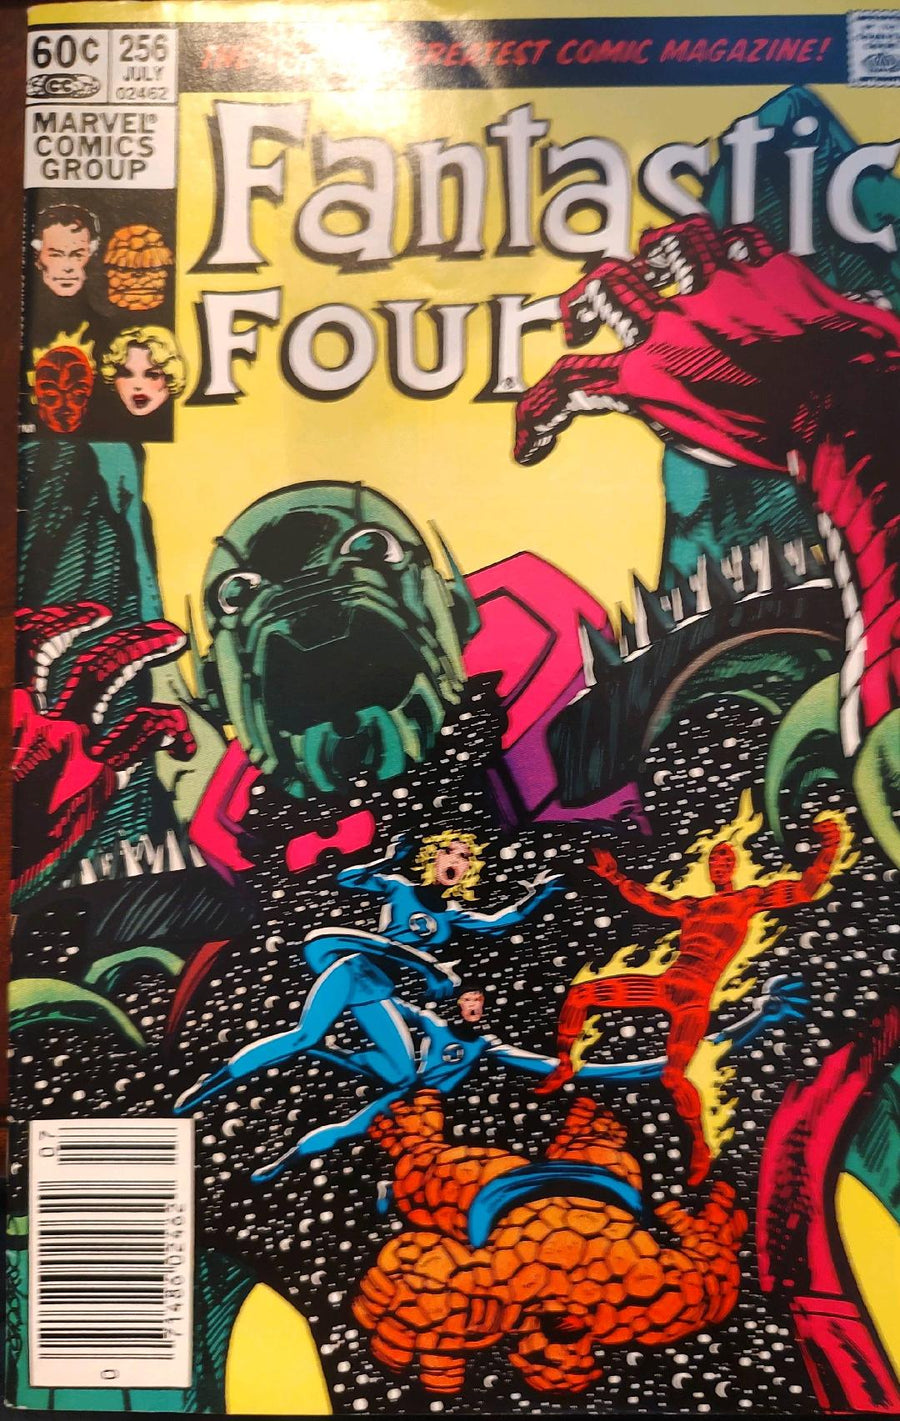 Fantastic Four #256 Comic Book Cover